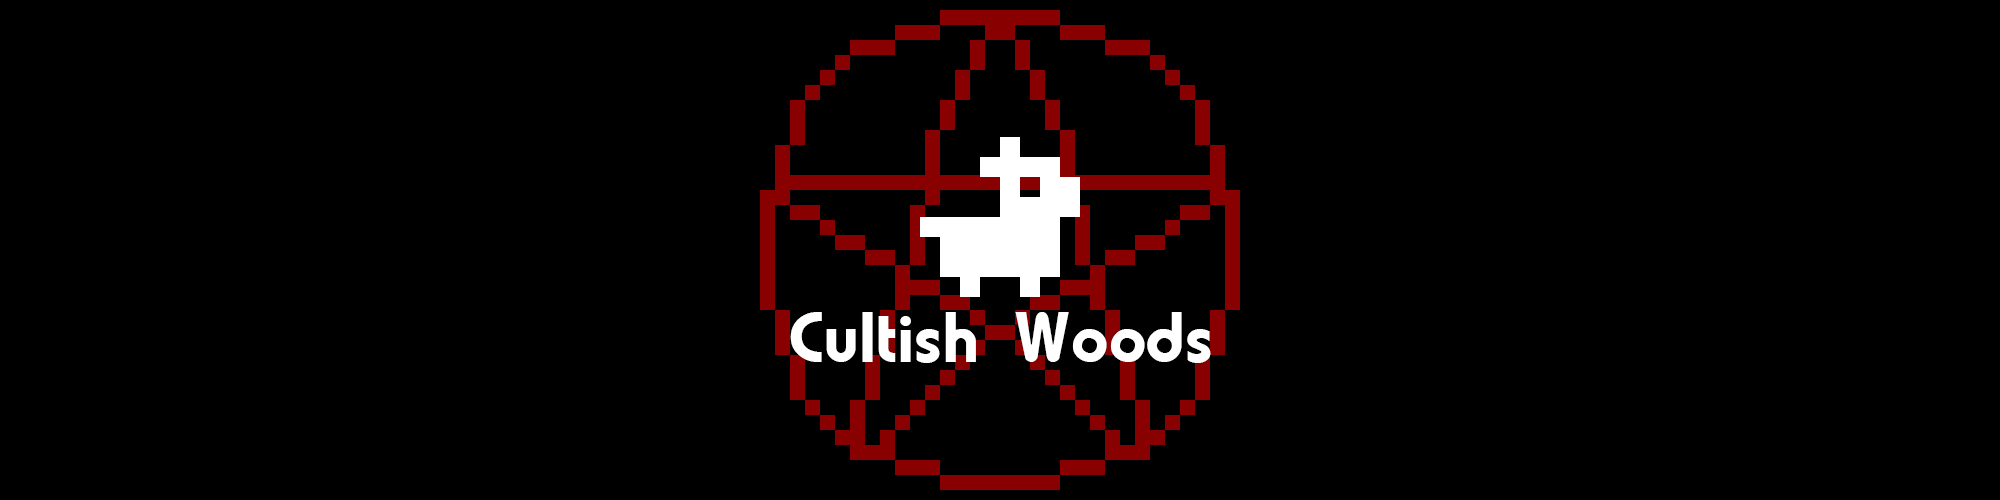 Cultish Woods